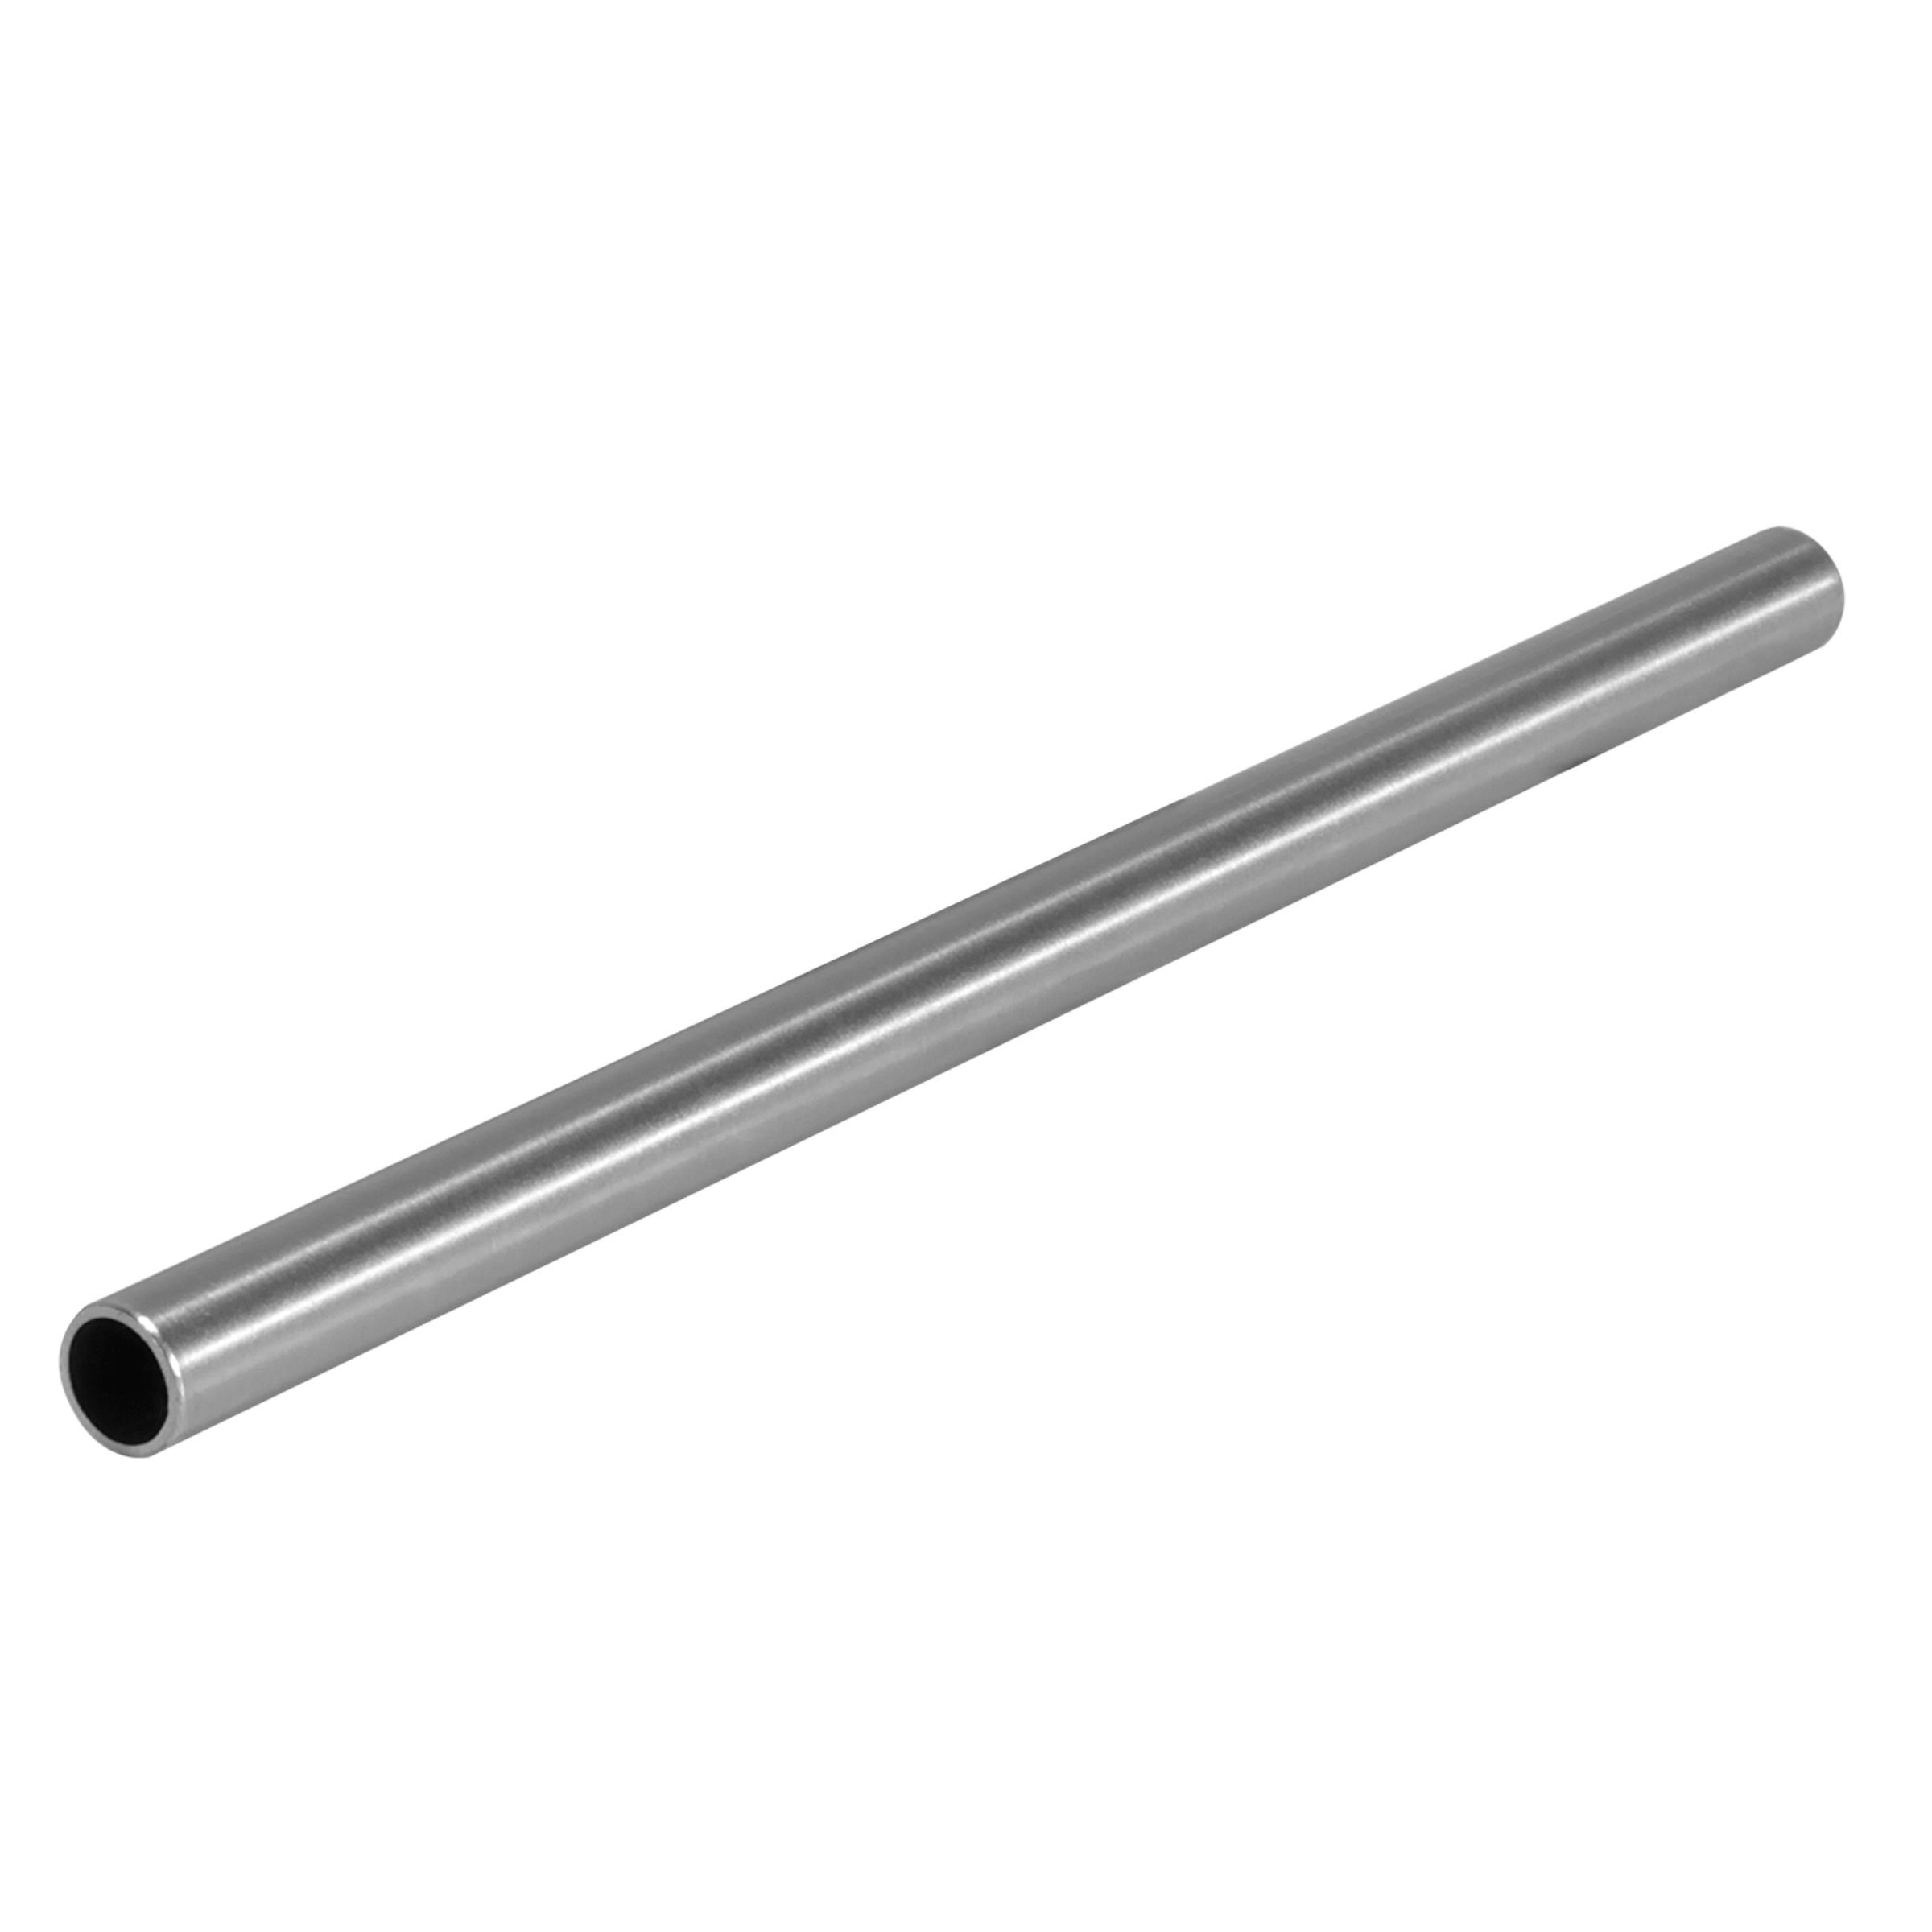 Nickel based astm400 k500 seamless alloy steel pipe with ASTM B127 Standard